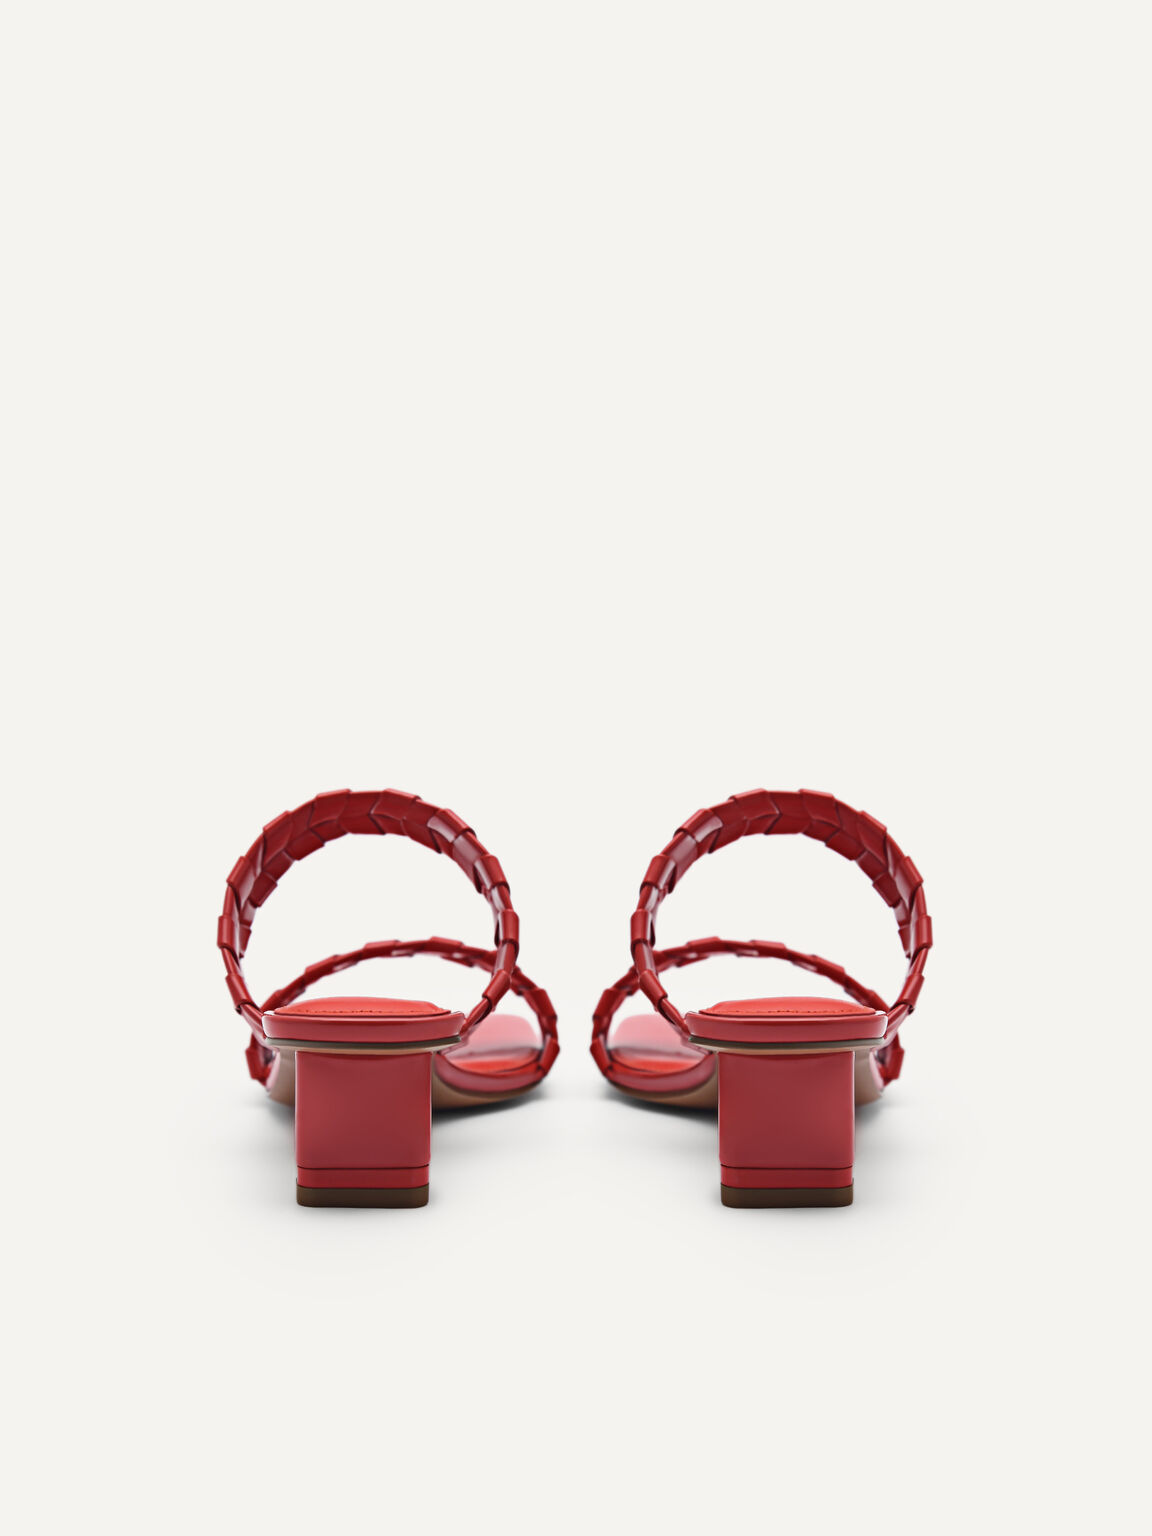 Palma Heel Sandals, Red